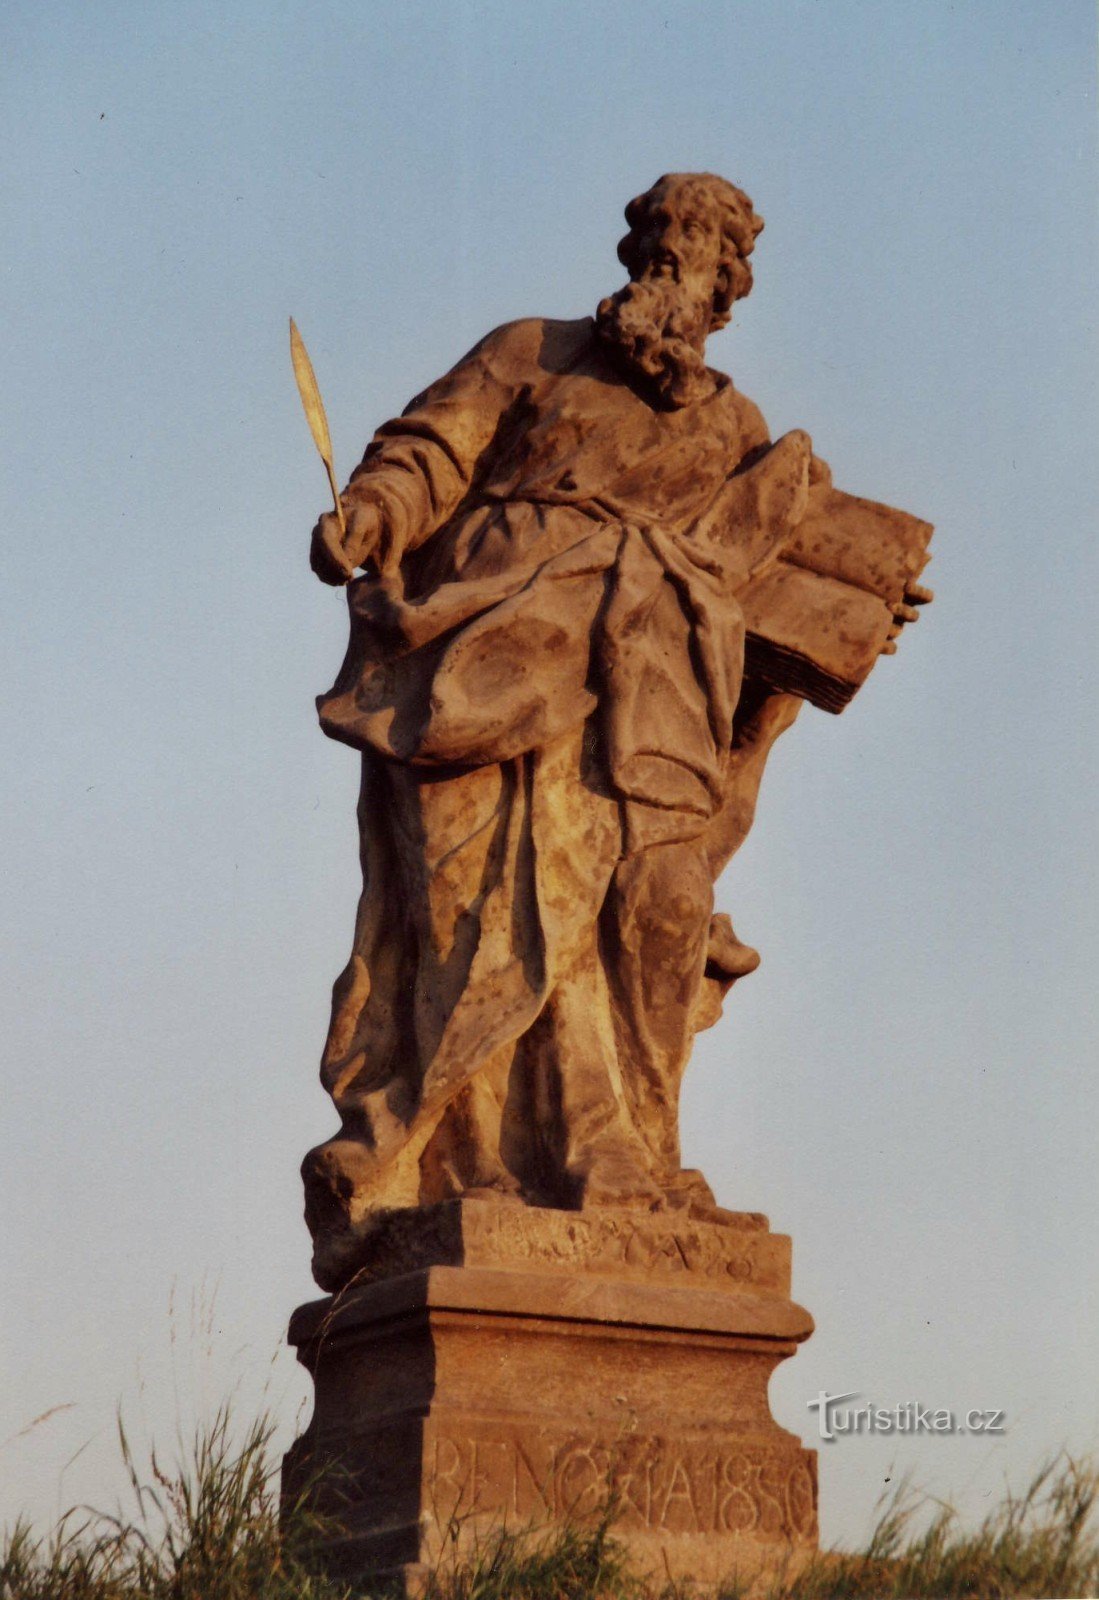 Chertoryje - 圣彼得雕像标记